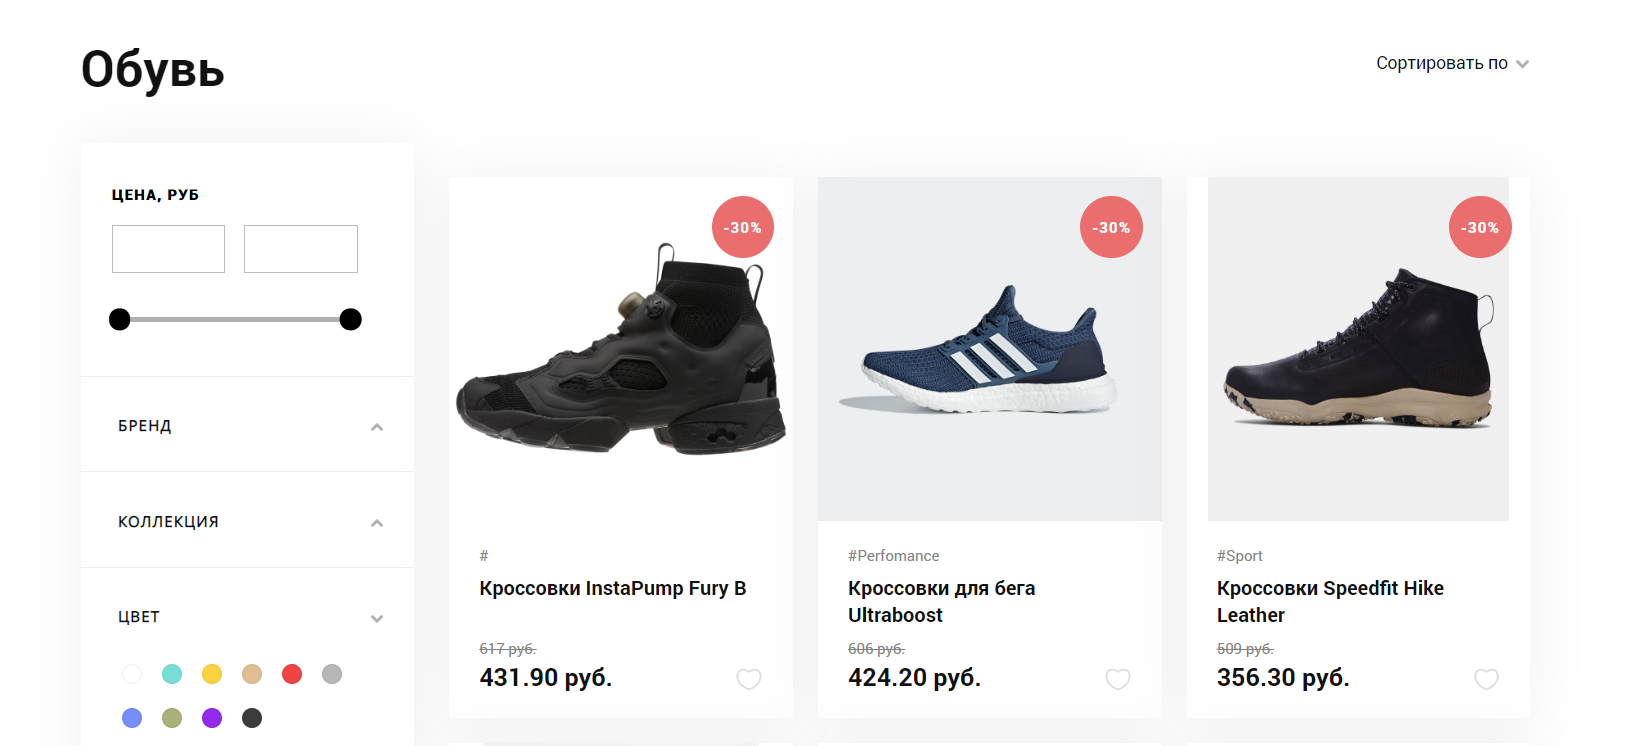 multisports.by - интернет-магазин adidas, reebok, nike, under armour в республике беларусь.